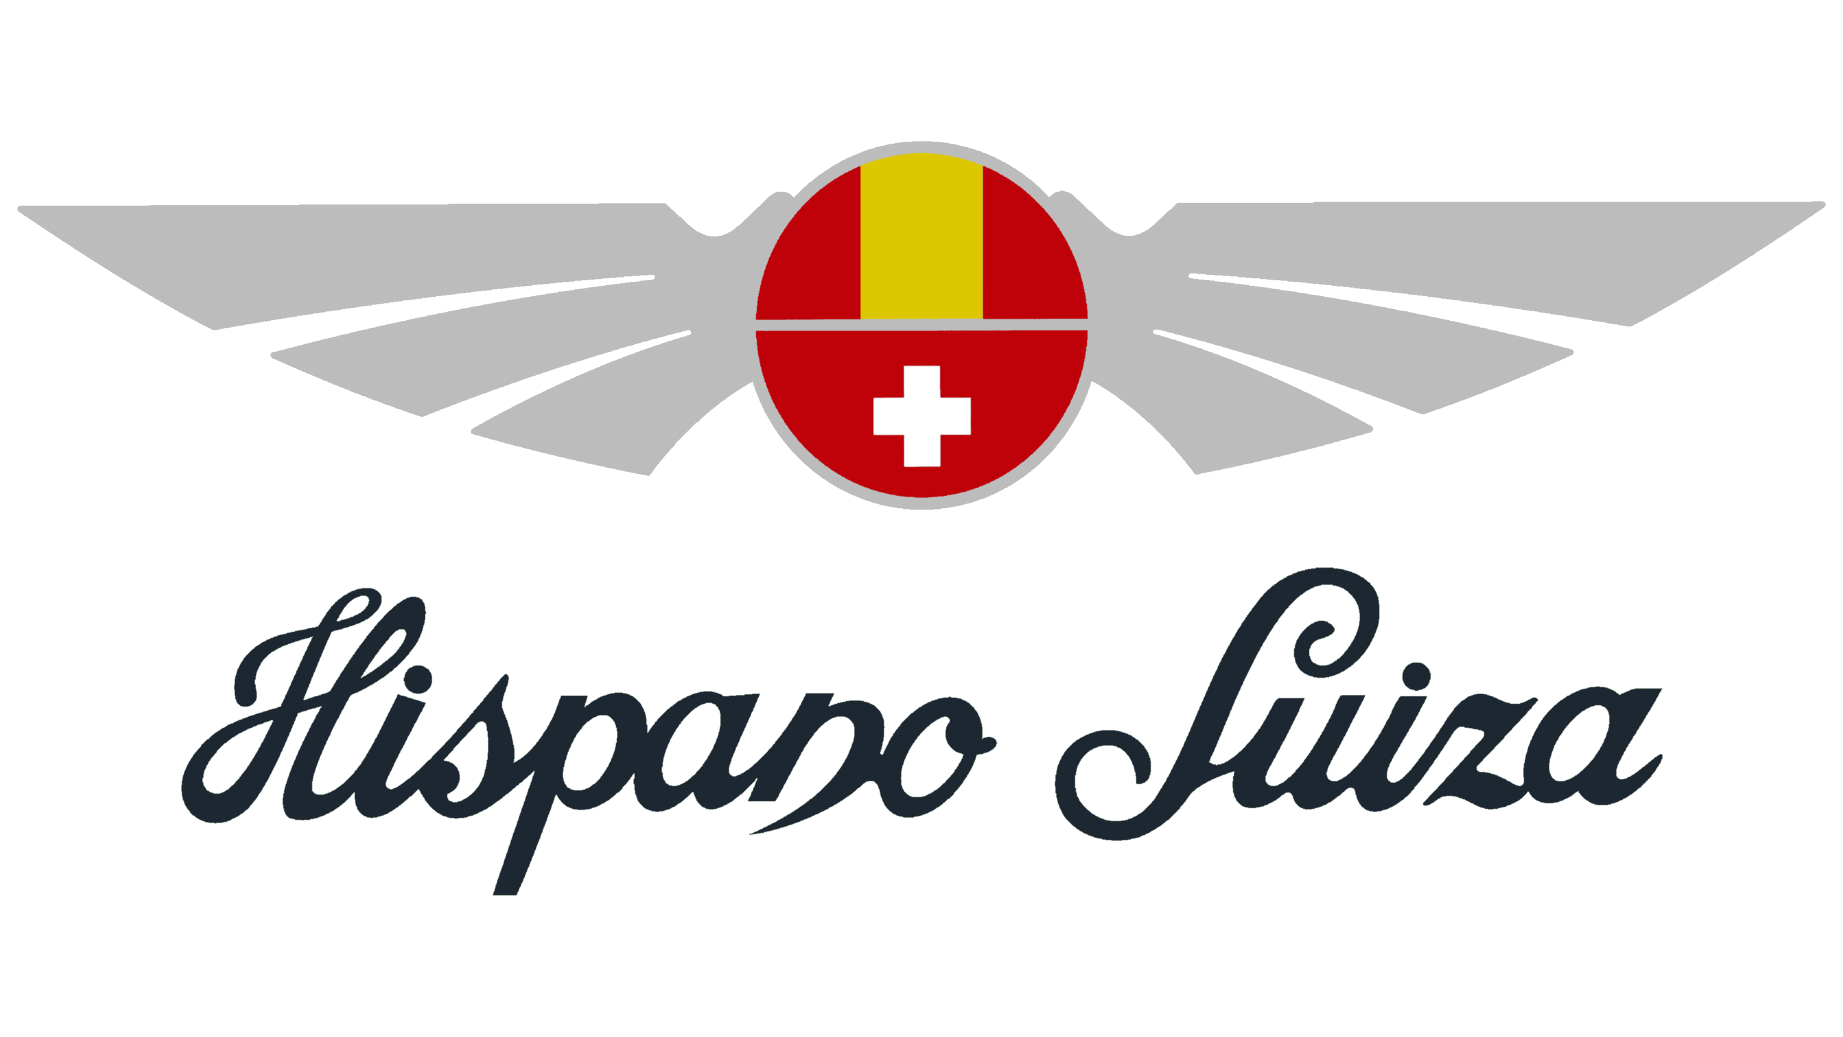 Hispano suiza sign